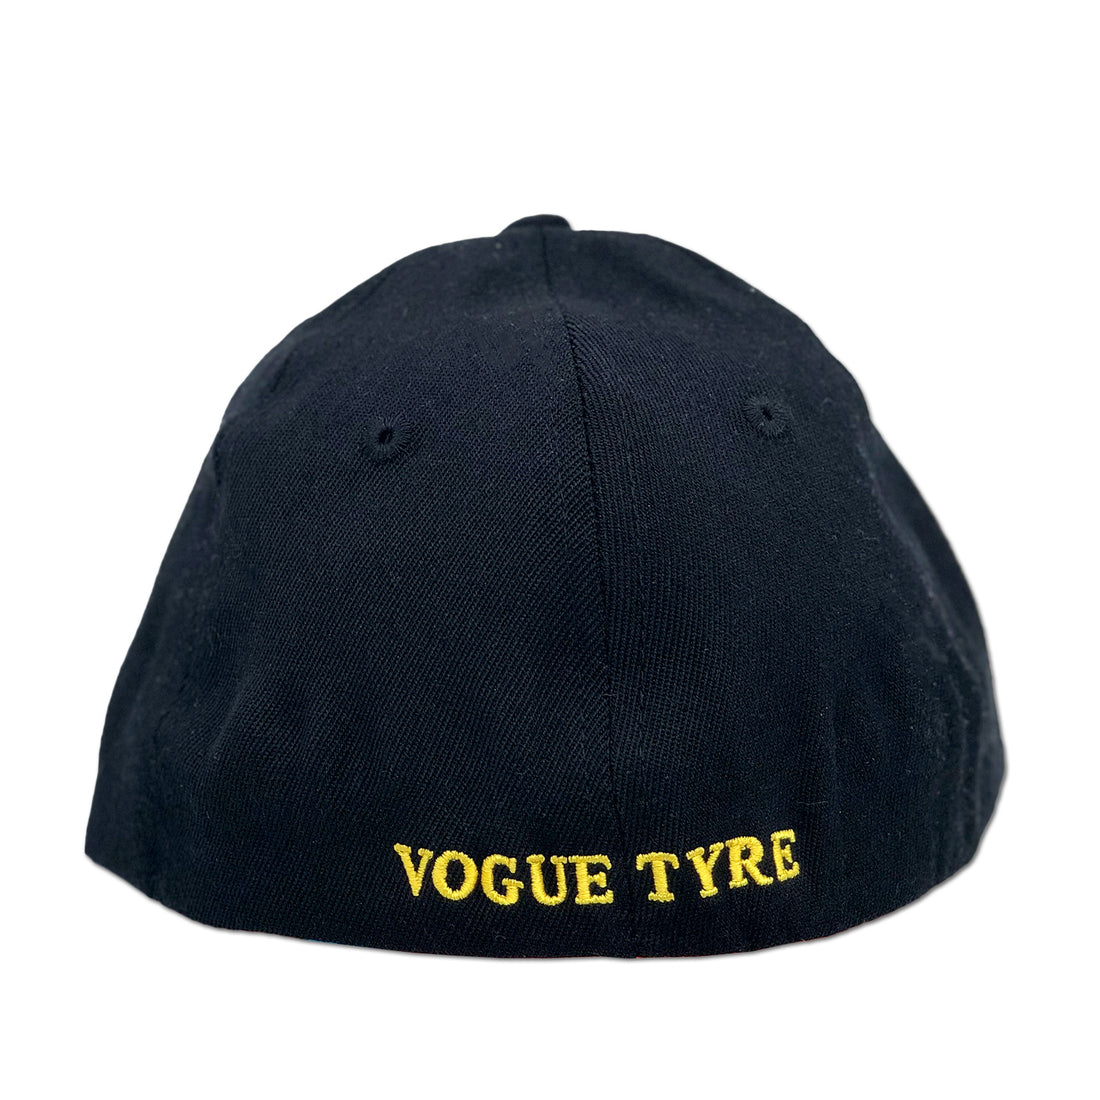 Vogue Tyre Black Flat-Billed Striped Hat